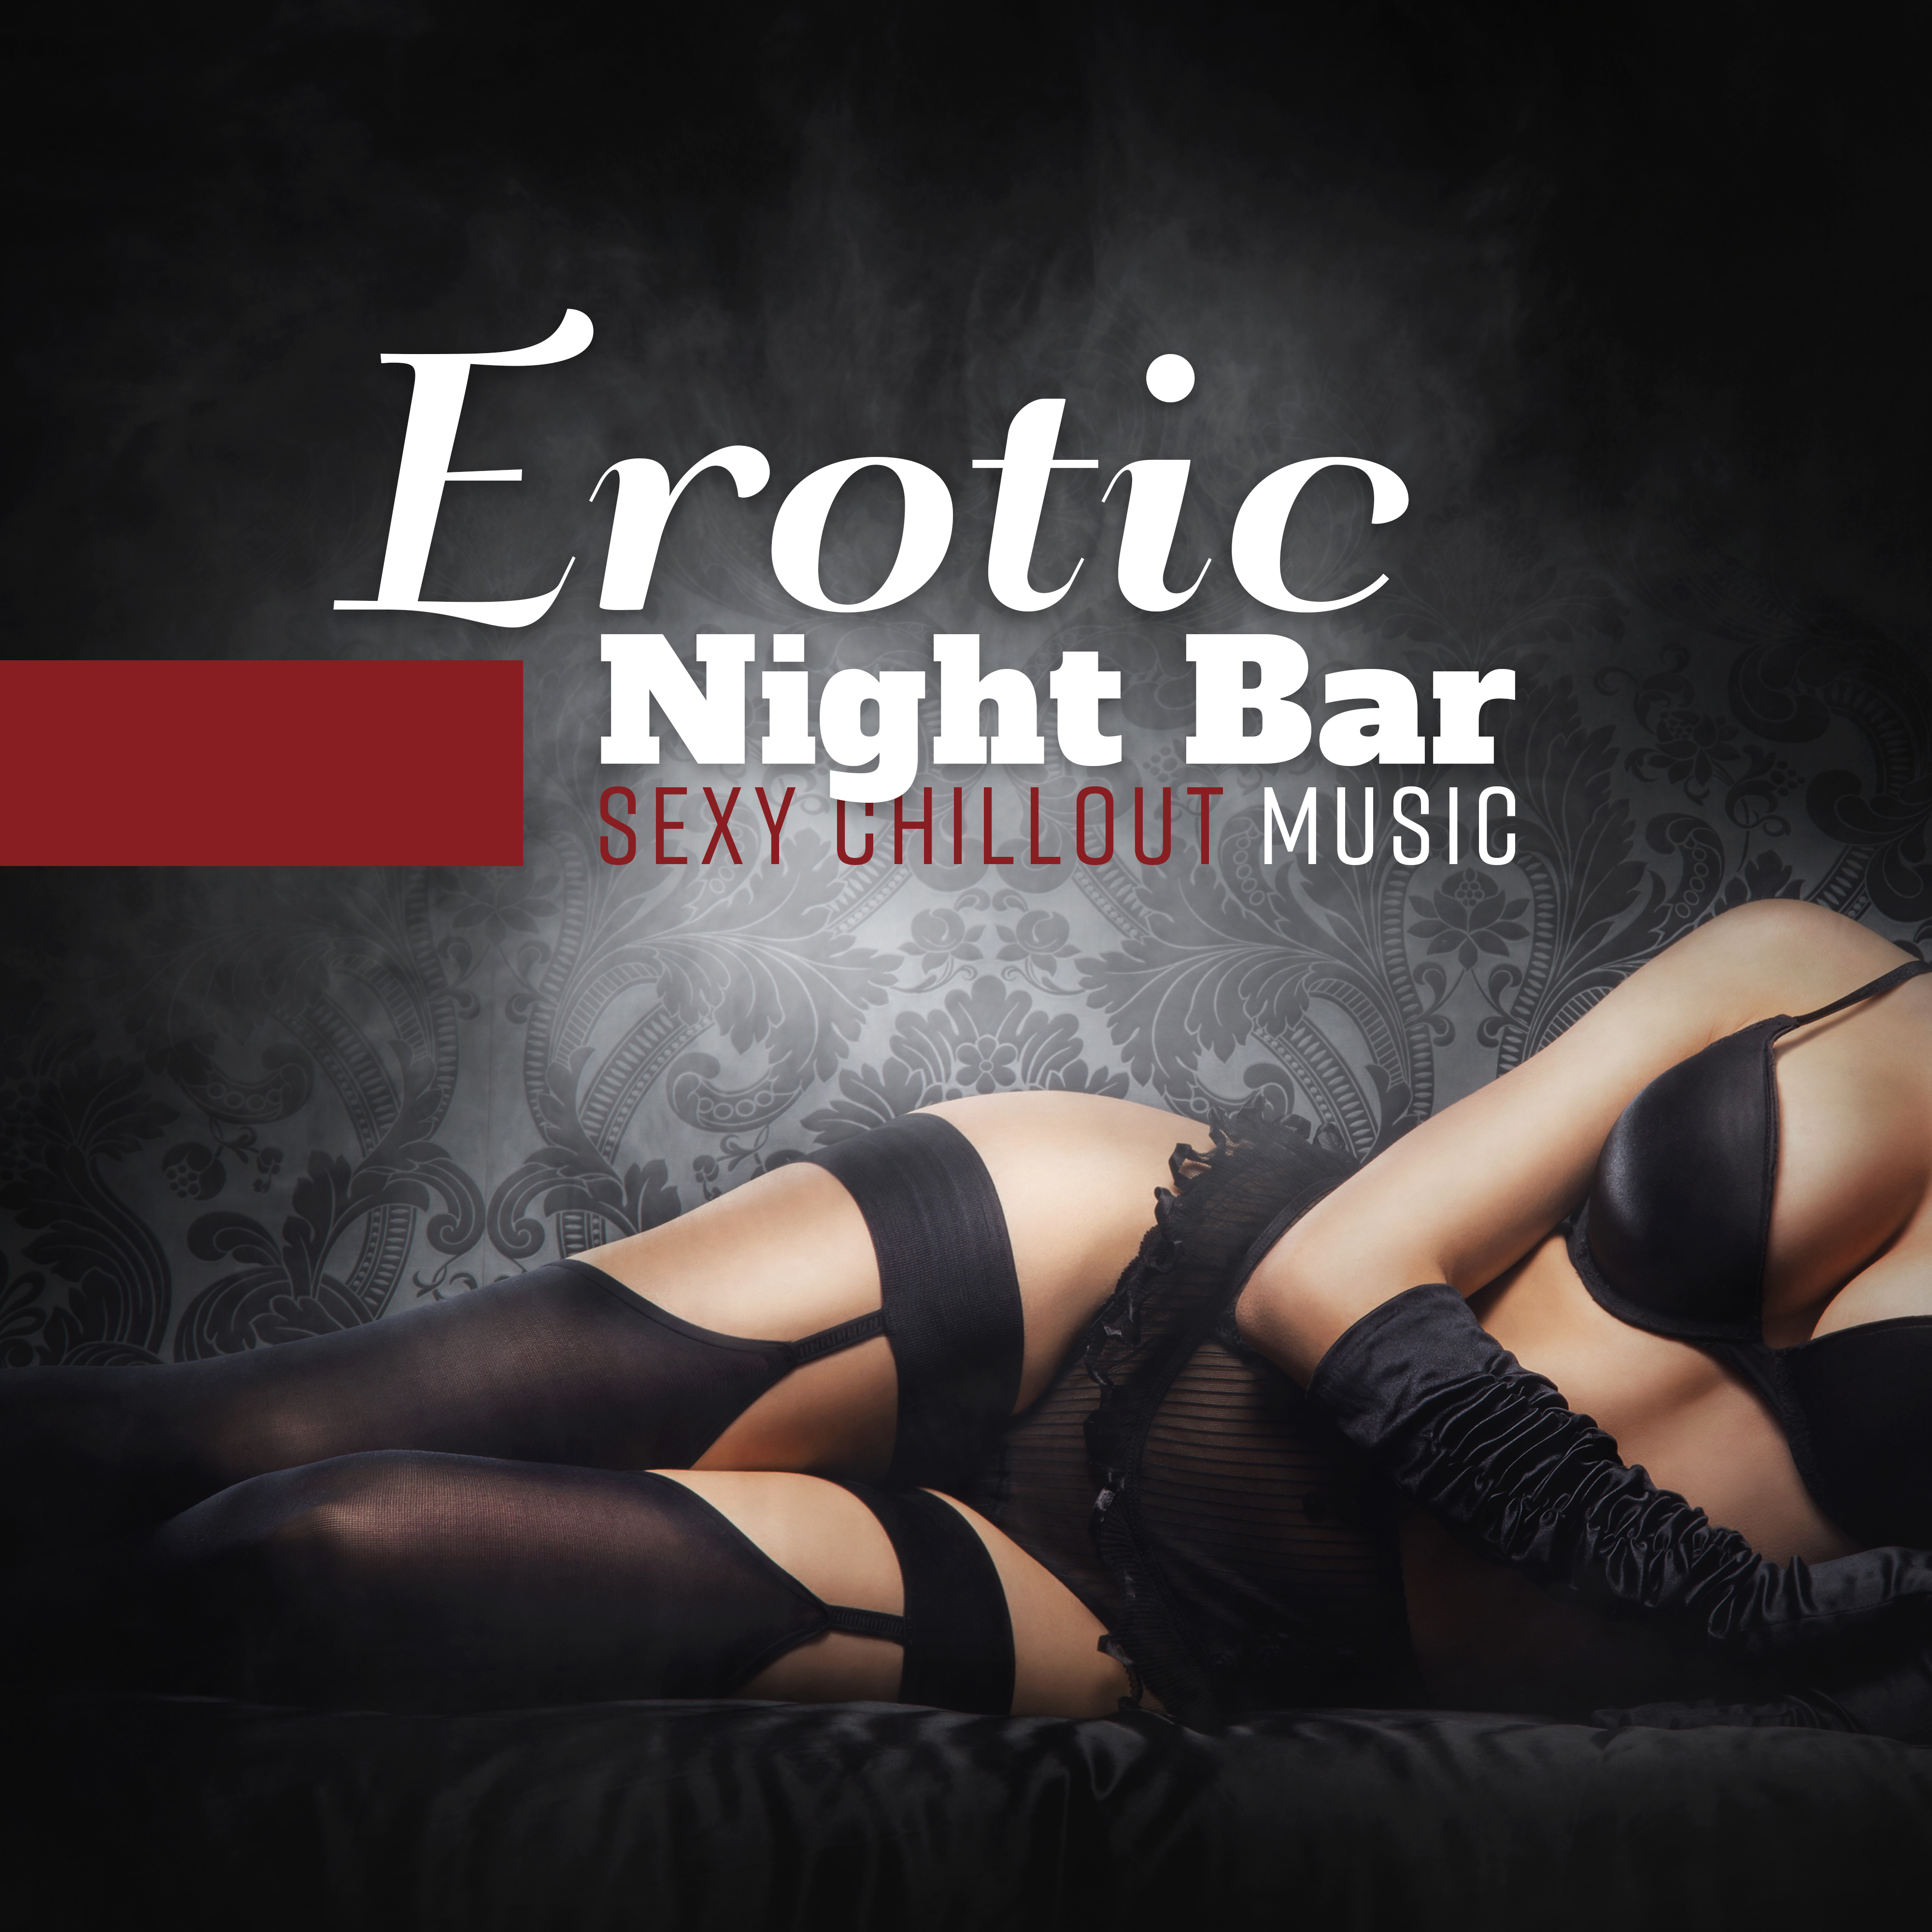 Erotic Night Bar: **** Chillout Music